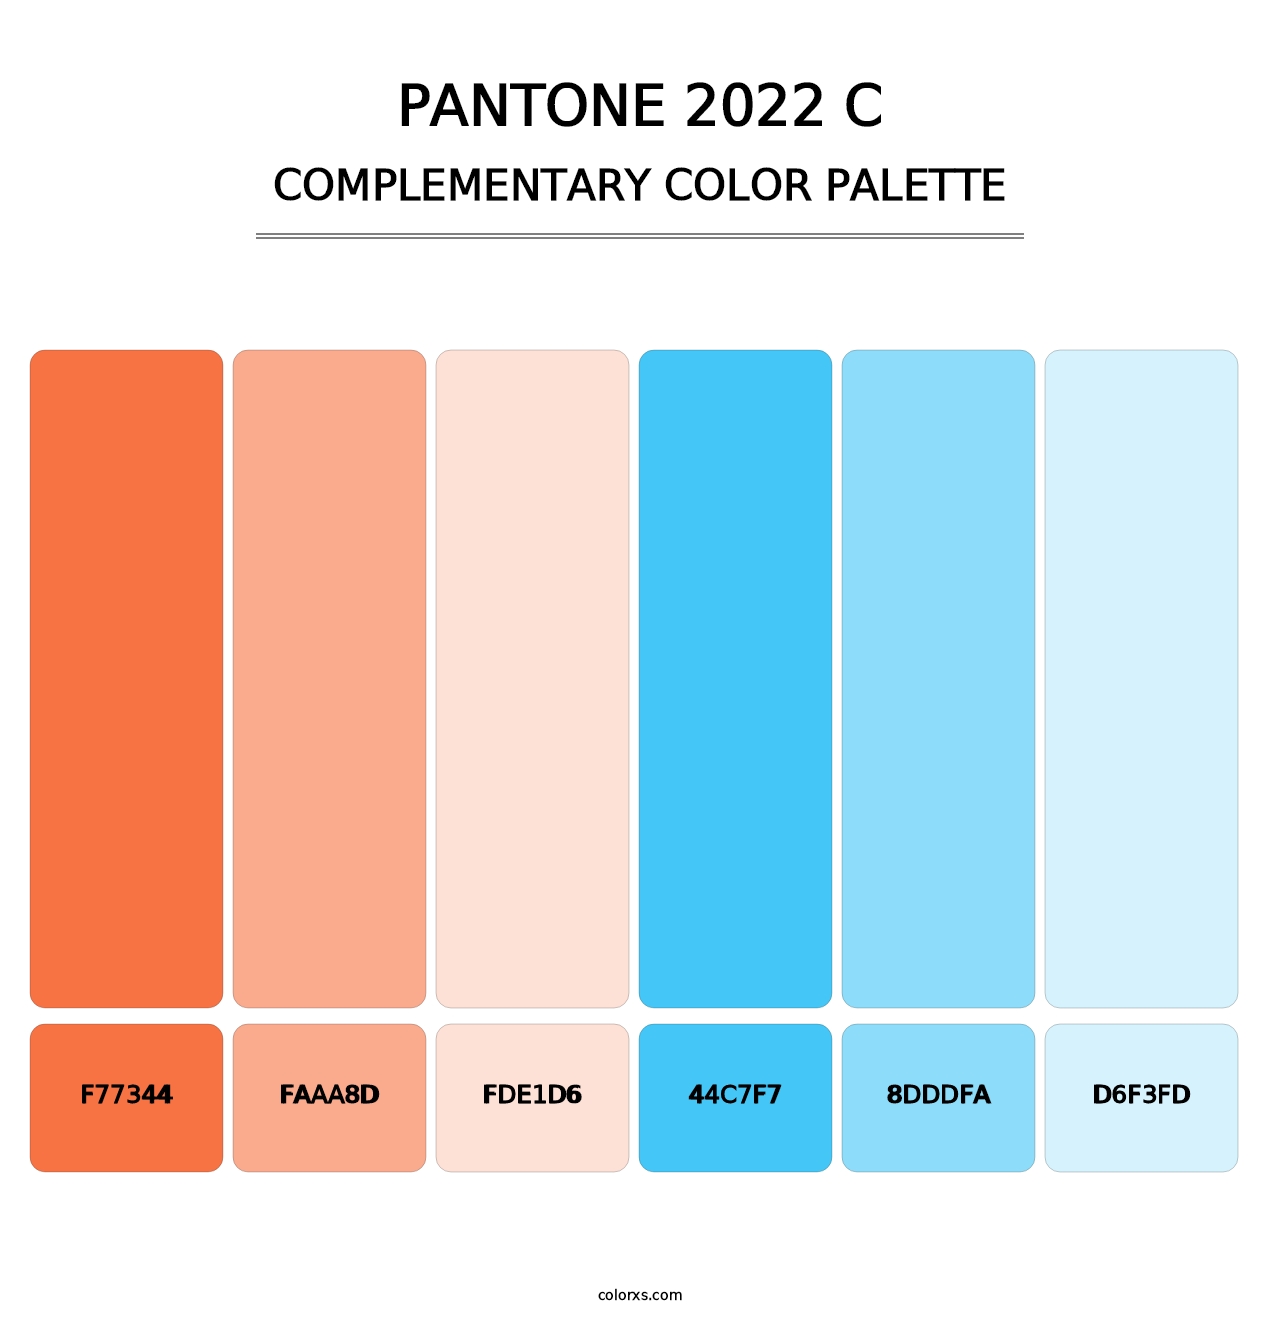 PANTONE 2022 C - Complementary Color Palette